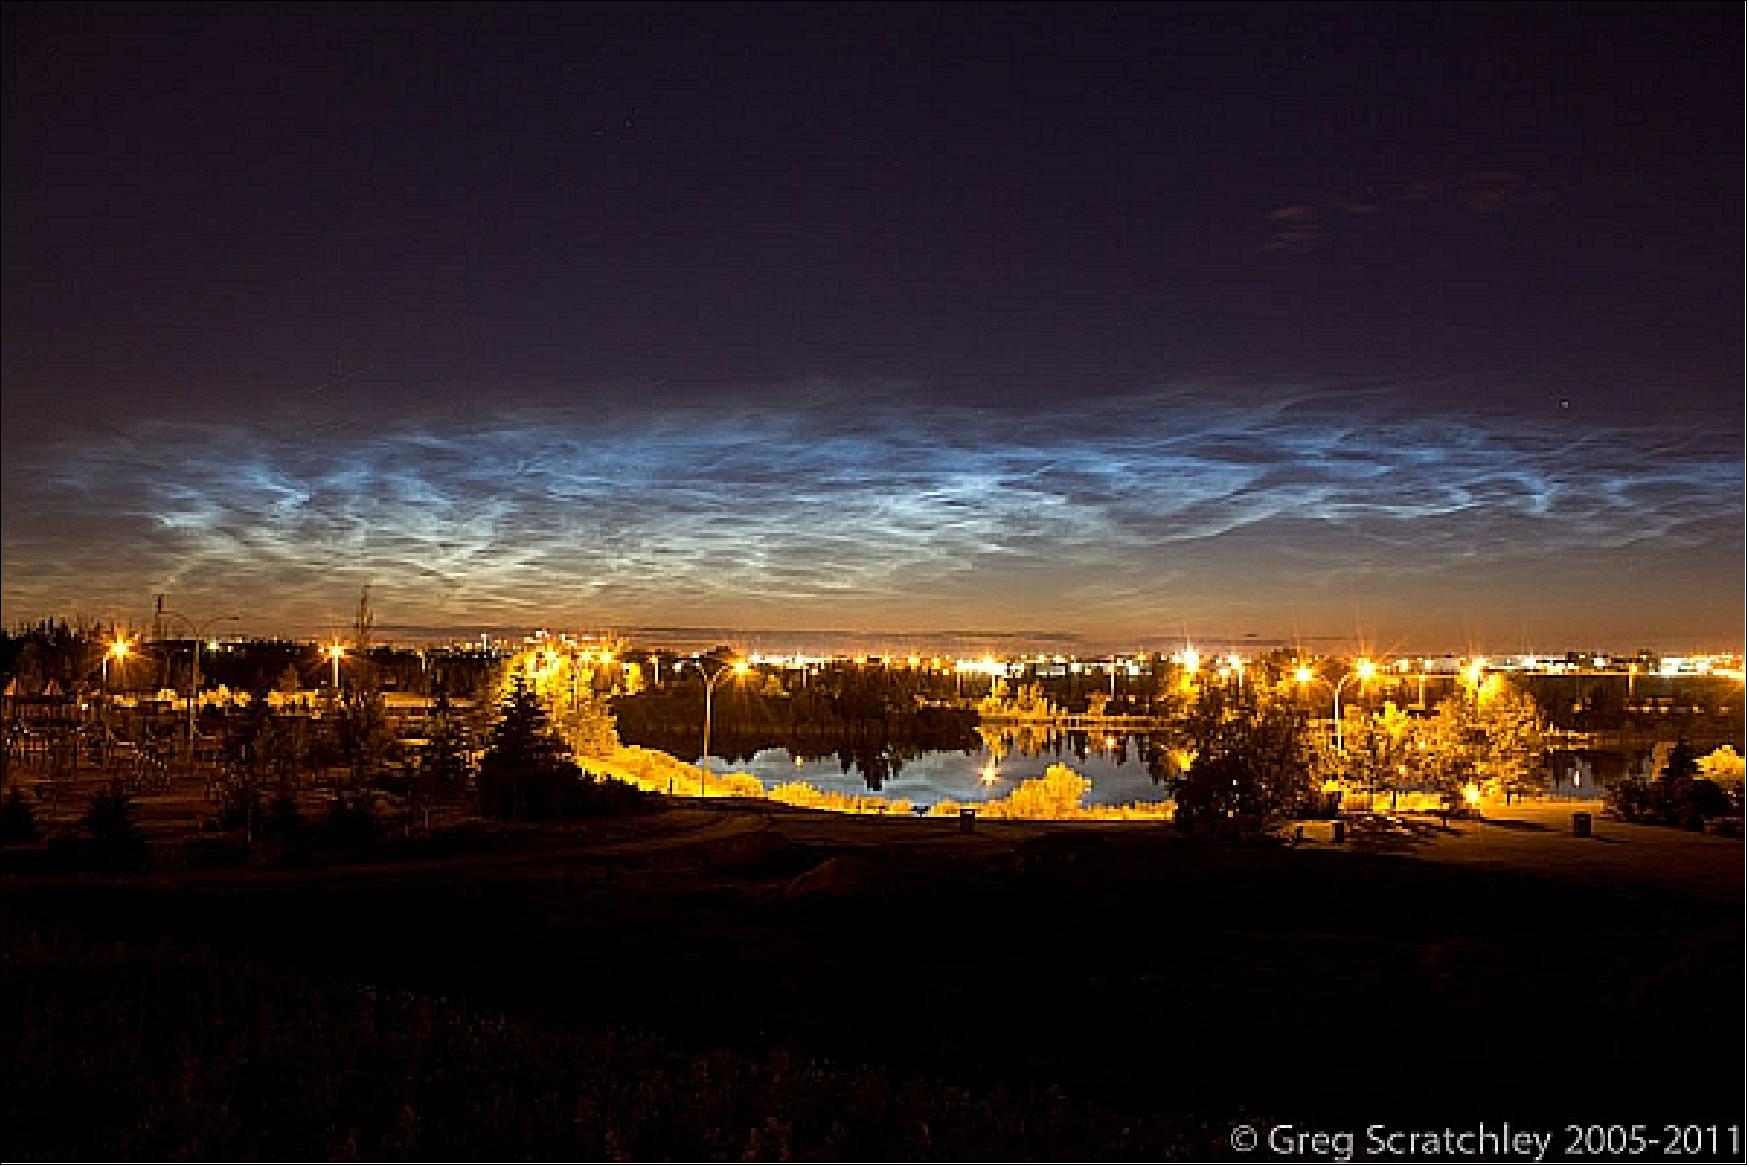 Figure 21: Noctilucent clouds over Edmonton, Canada observed on July 20, 2011 (image credit: NASA) 35)